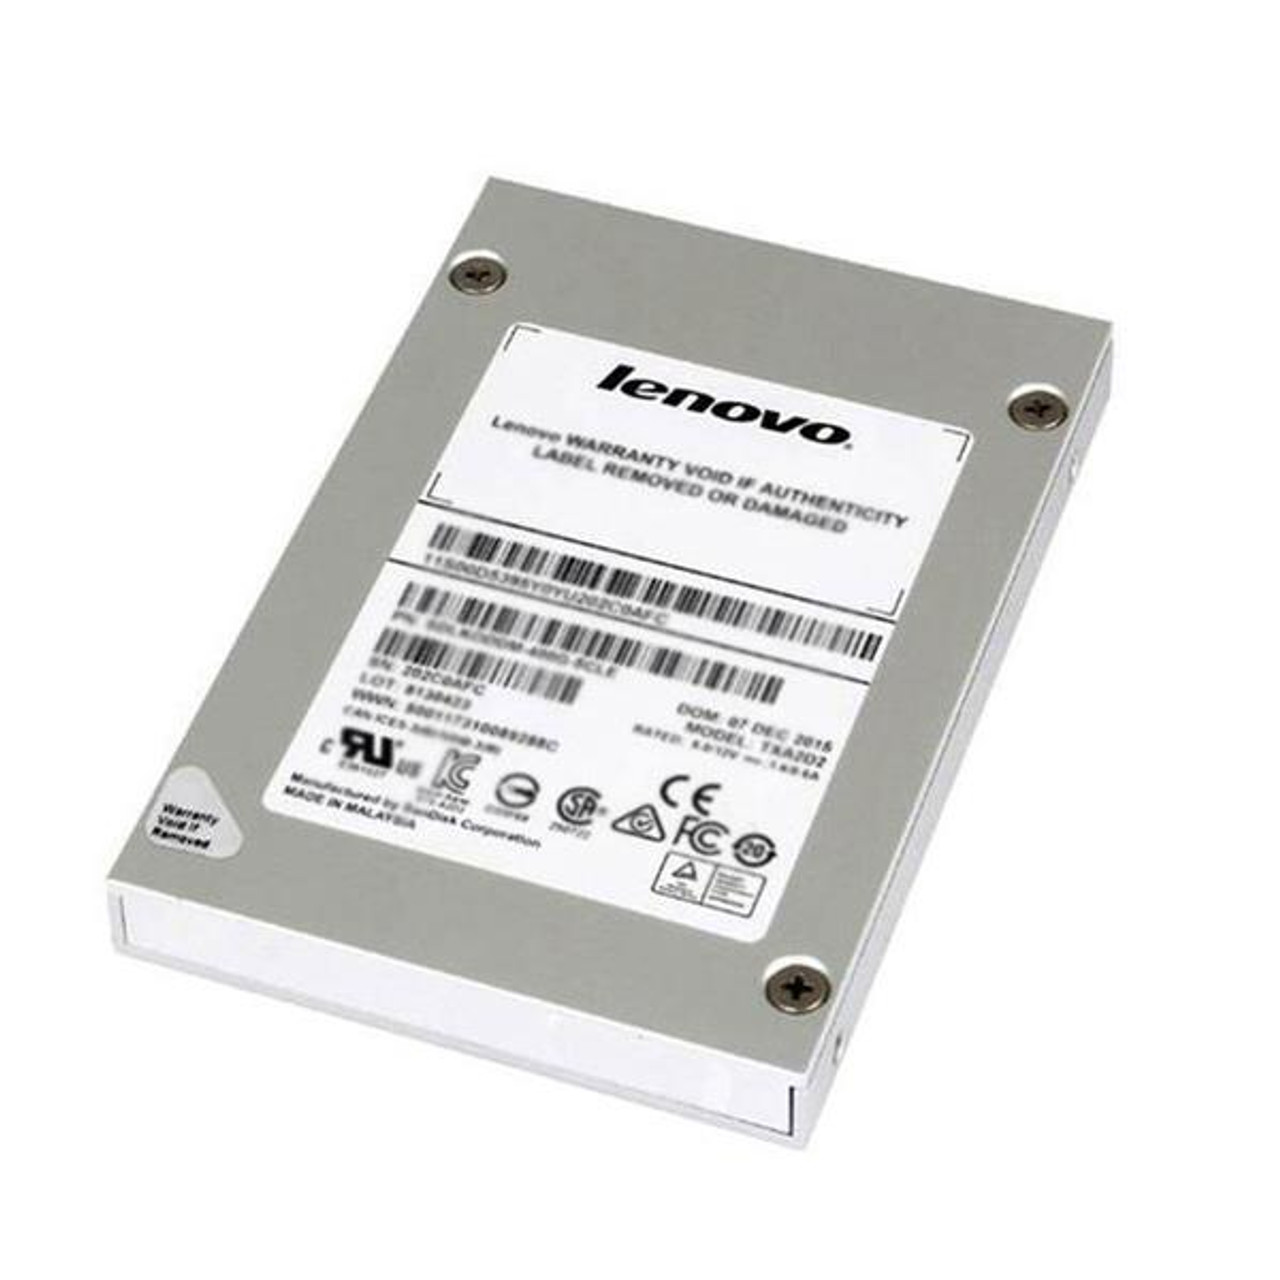 0C48923 Lenovo 100GB MLC SATA 3Gbps 2.5-inch Internal Solid State Drive (SSD)